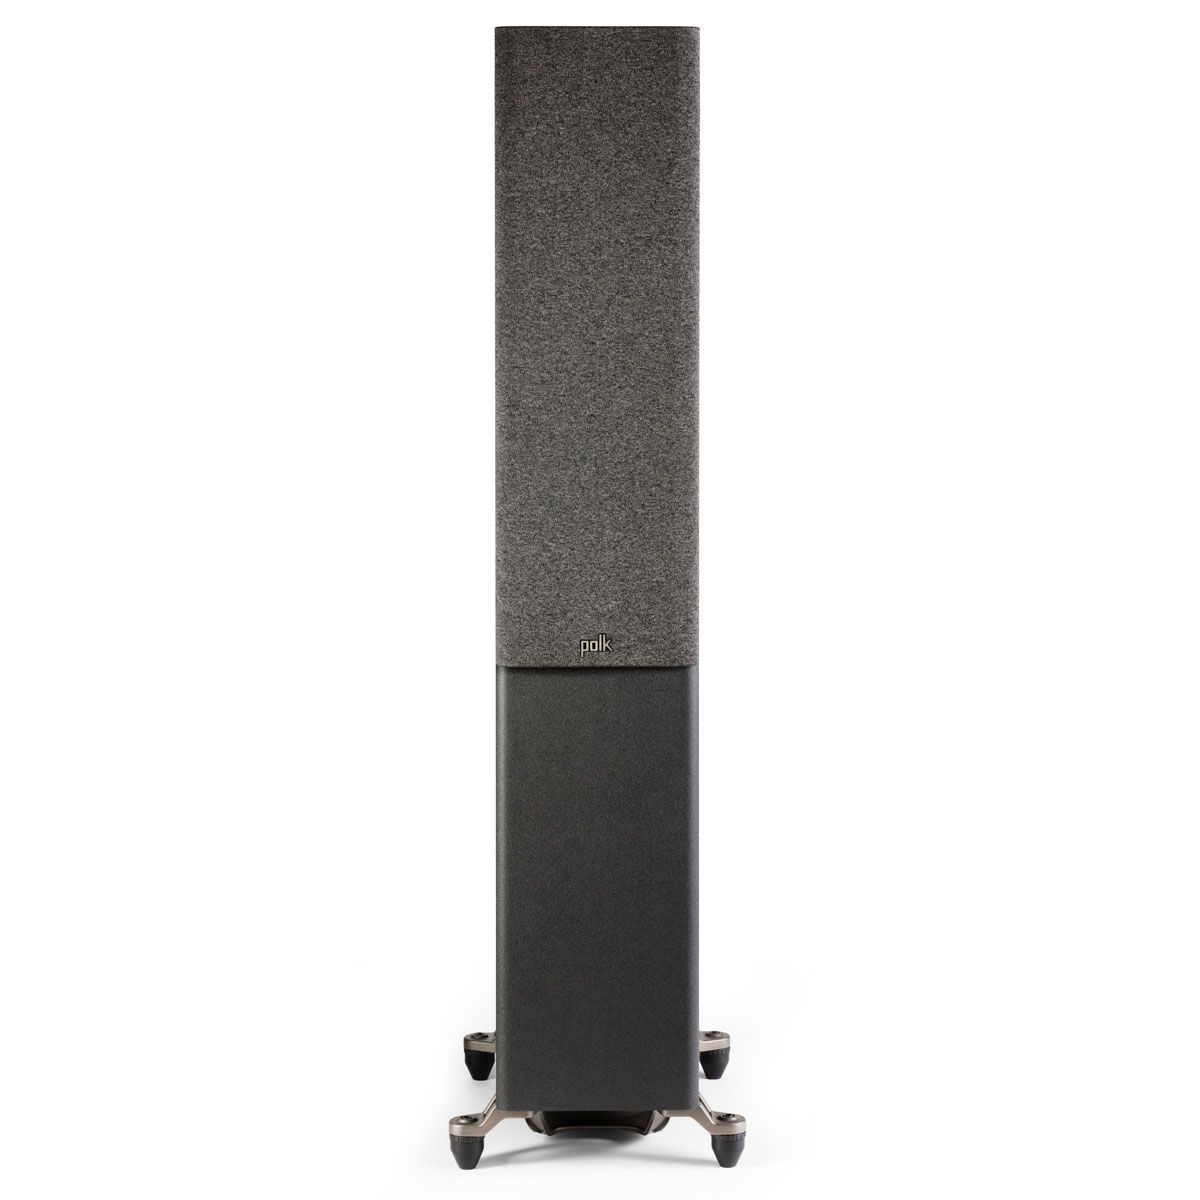 Polk Audio Reserve R600 Floorstanding Speaker, Black, front with grille